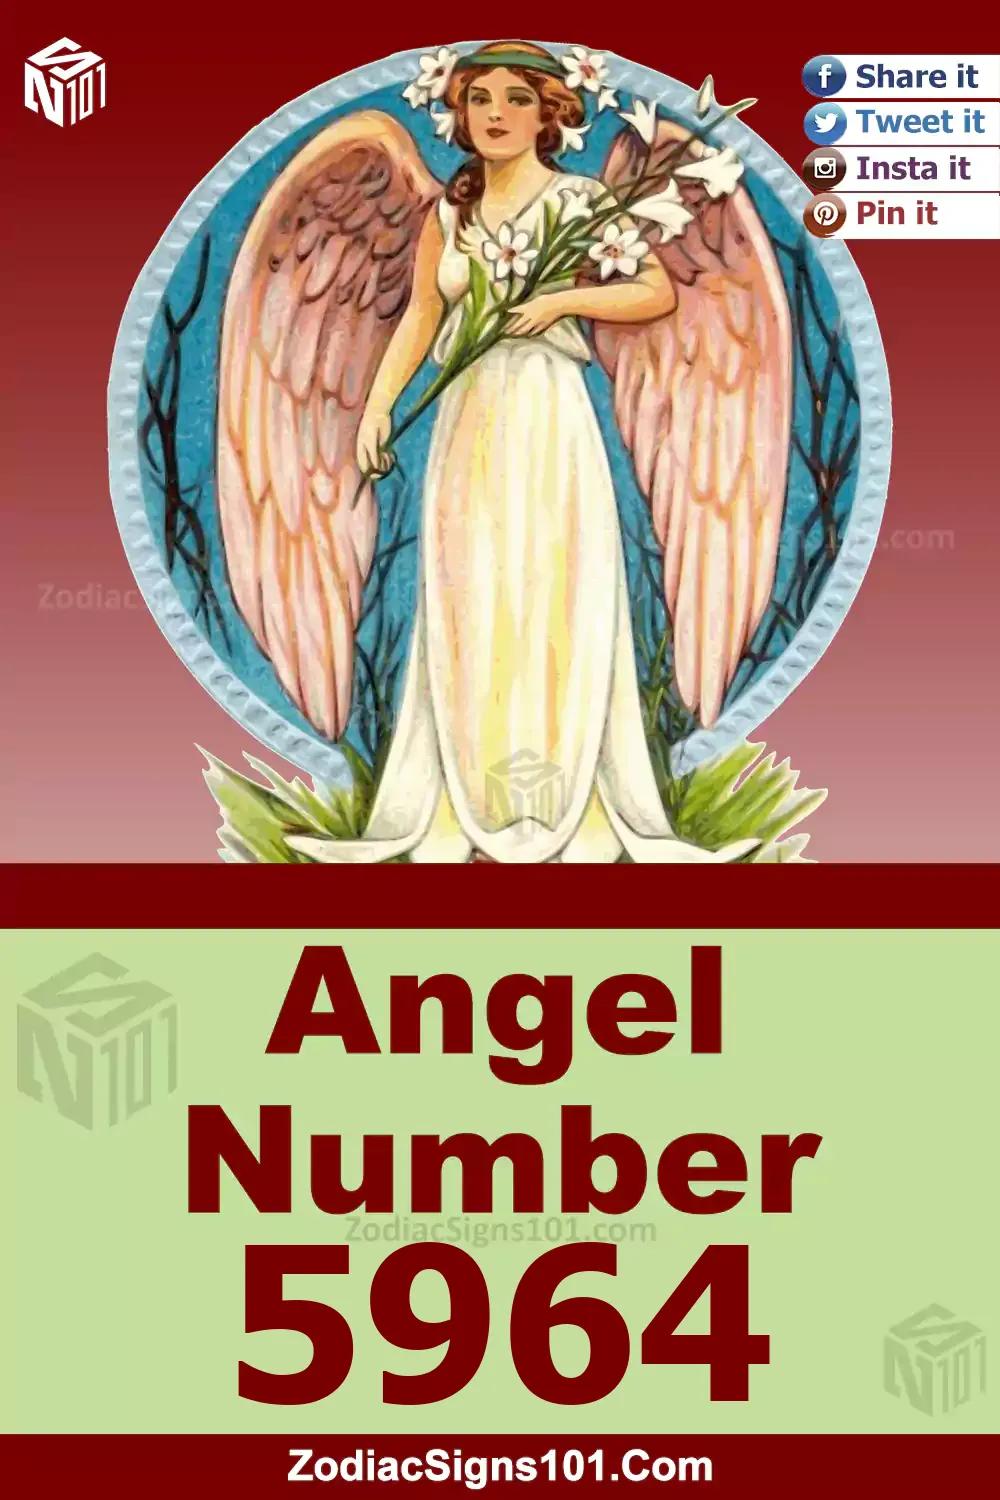 5964-Angel-Number-Meaning.jpg